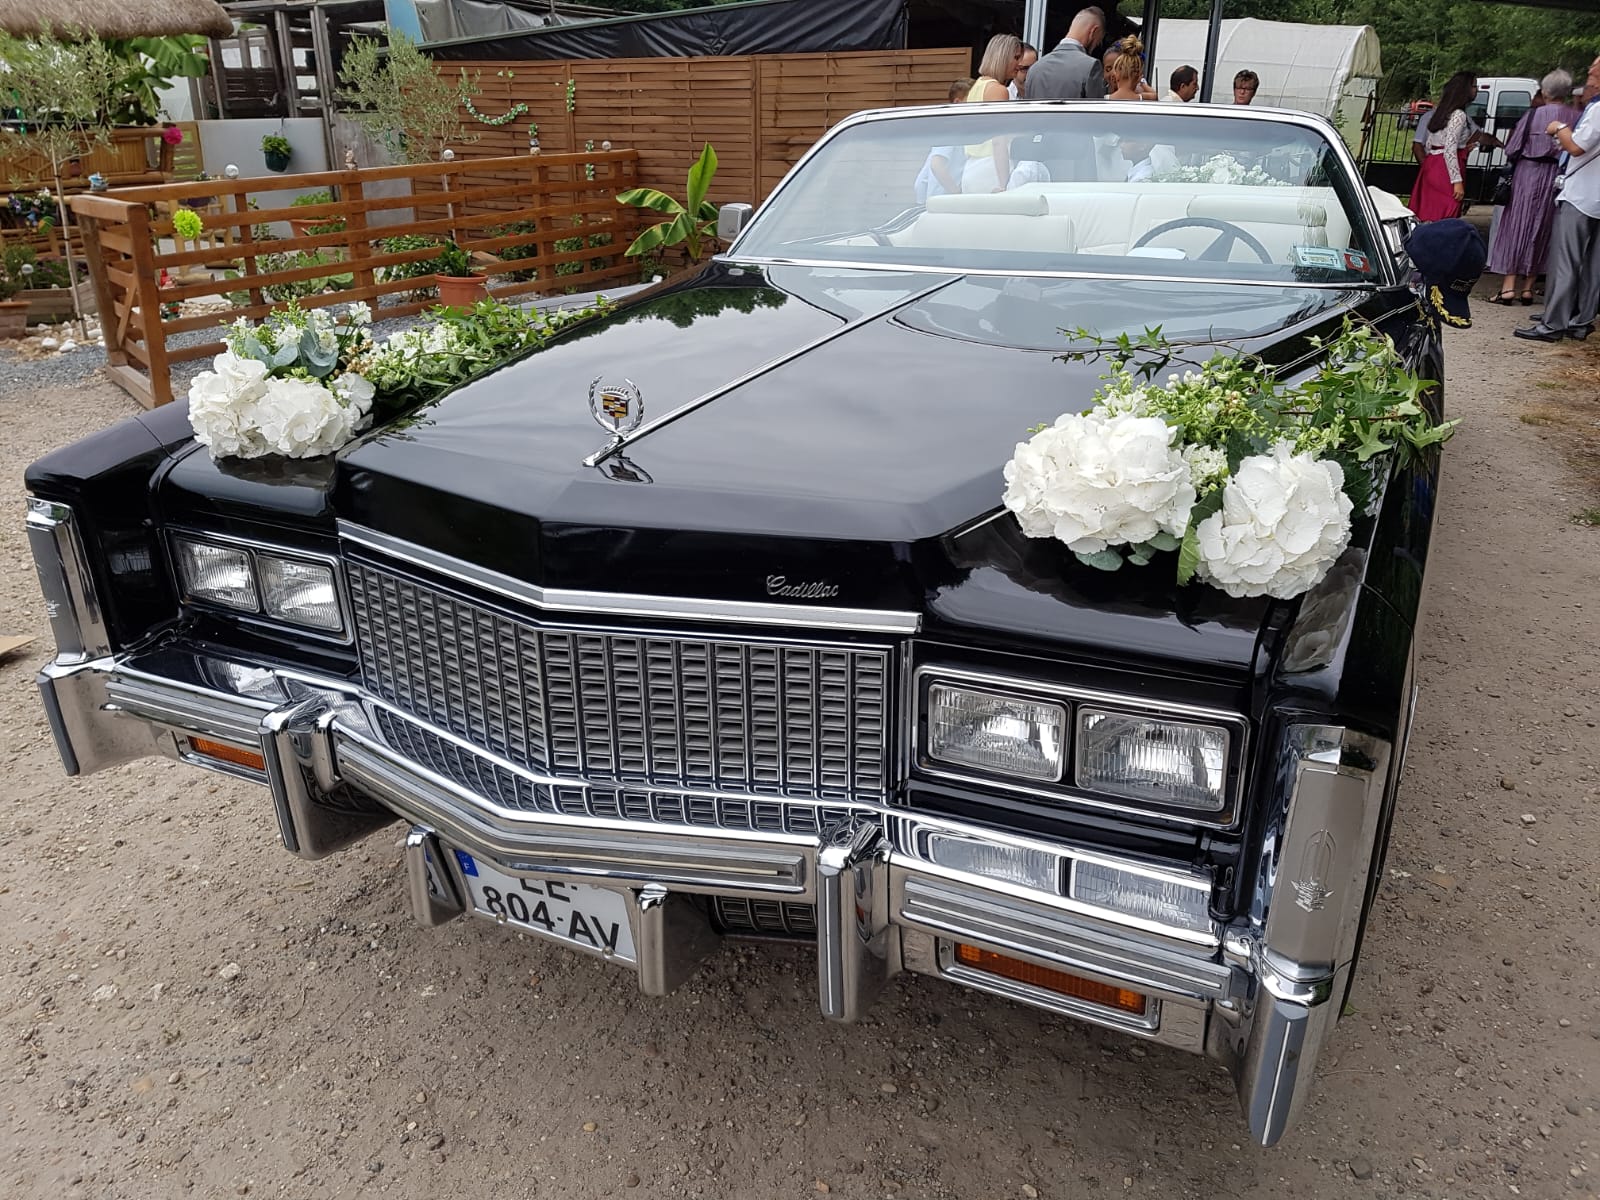 Location mariage Cadillac Eldorado décorée avec des fleurs